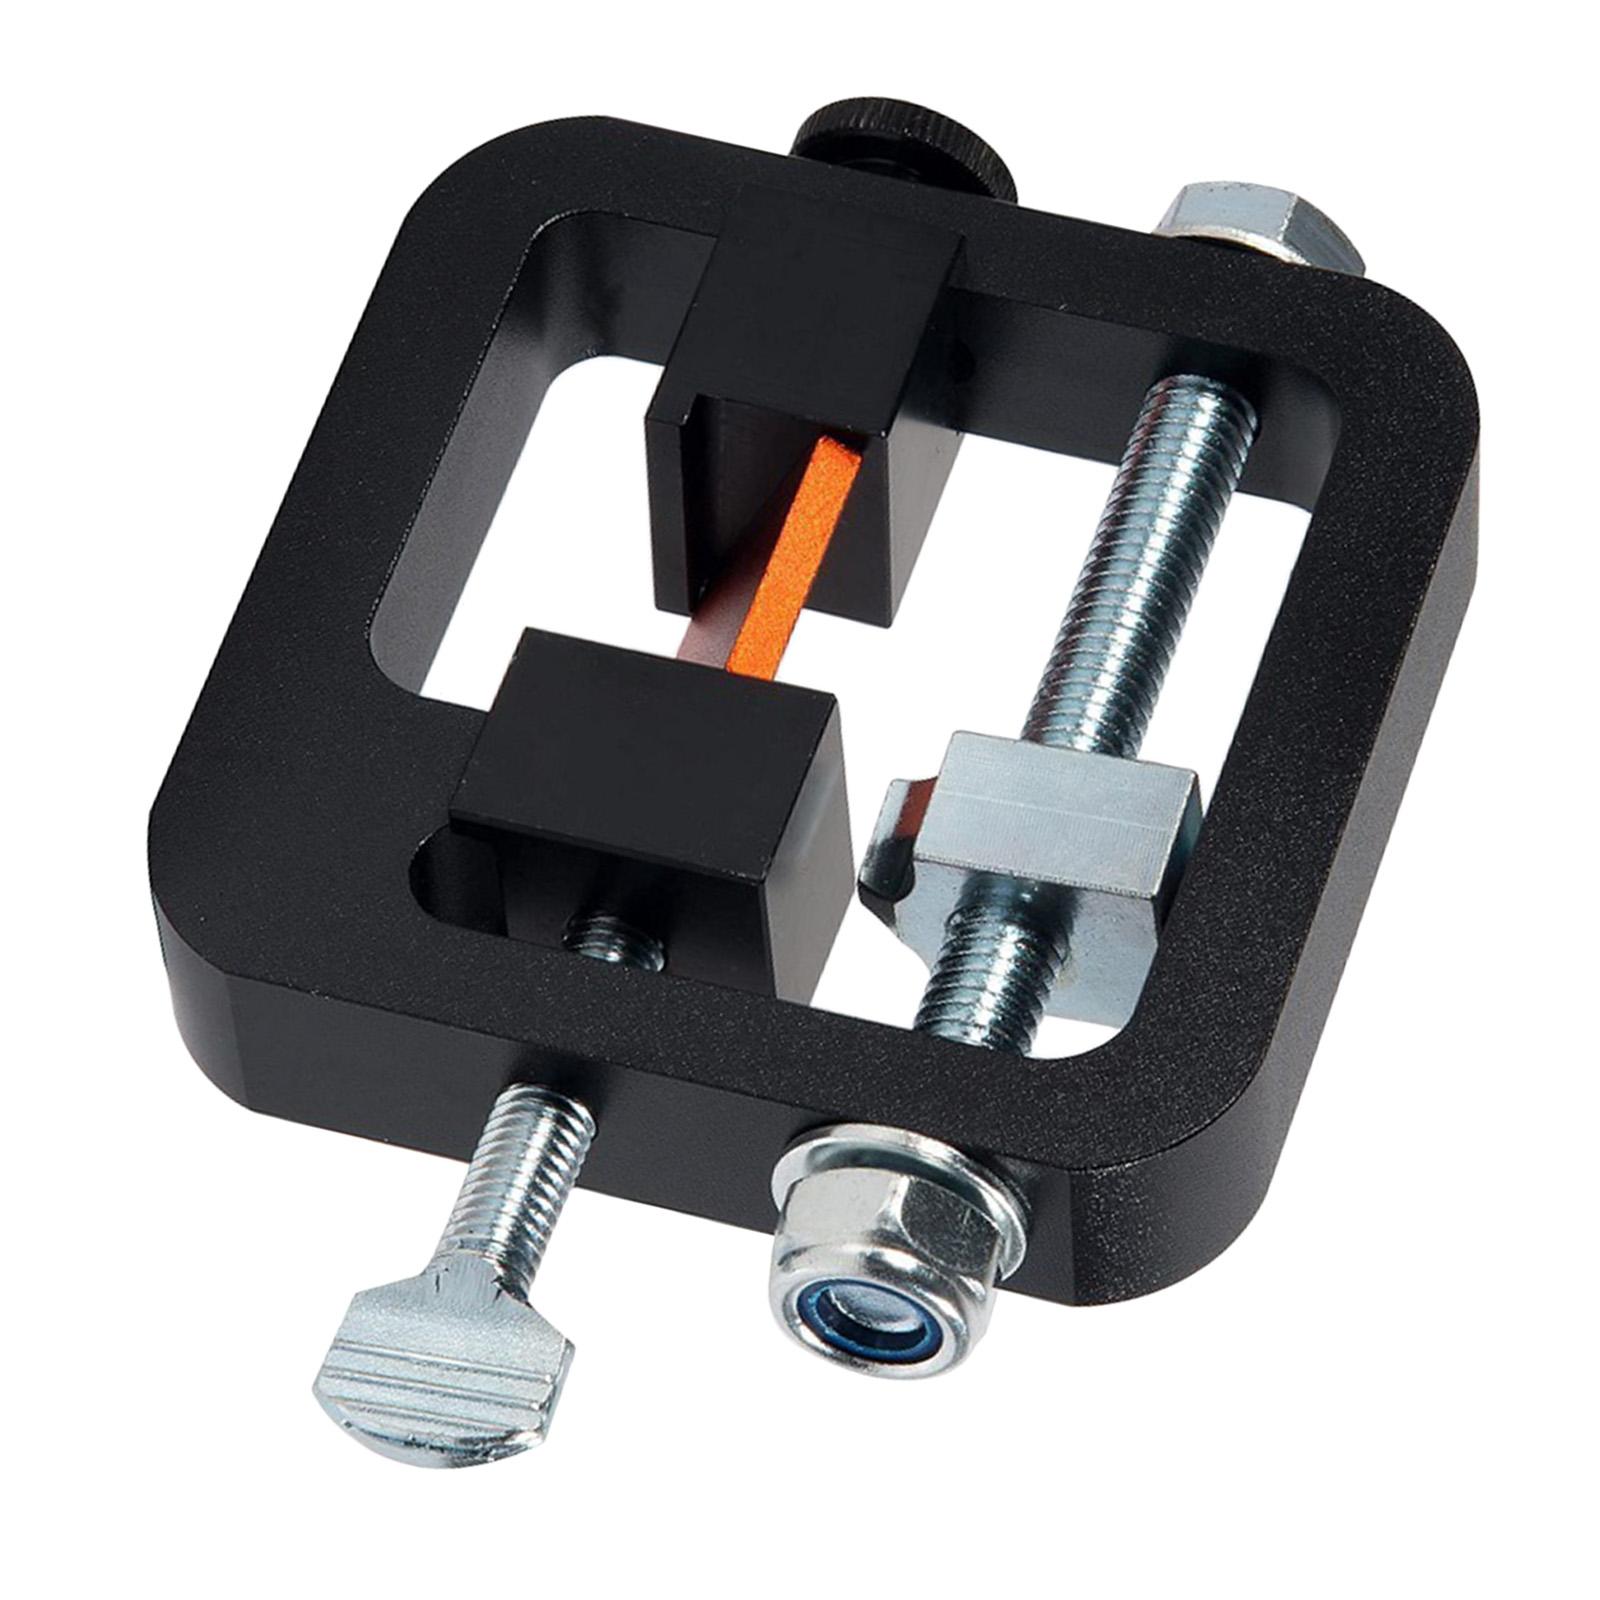  Rear Sight Pusher Tool Accessories 12x14x5cm Hunting Tool Adjustable